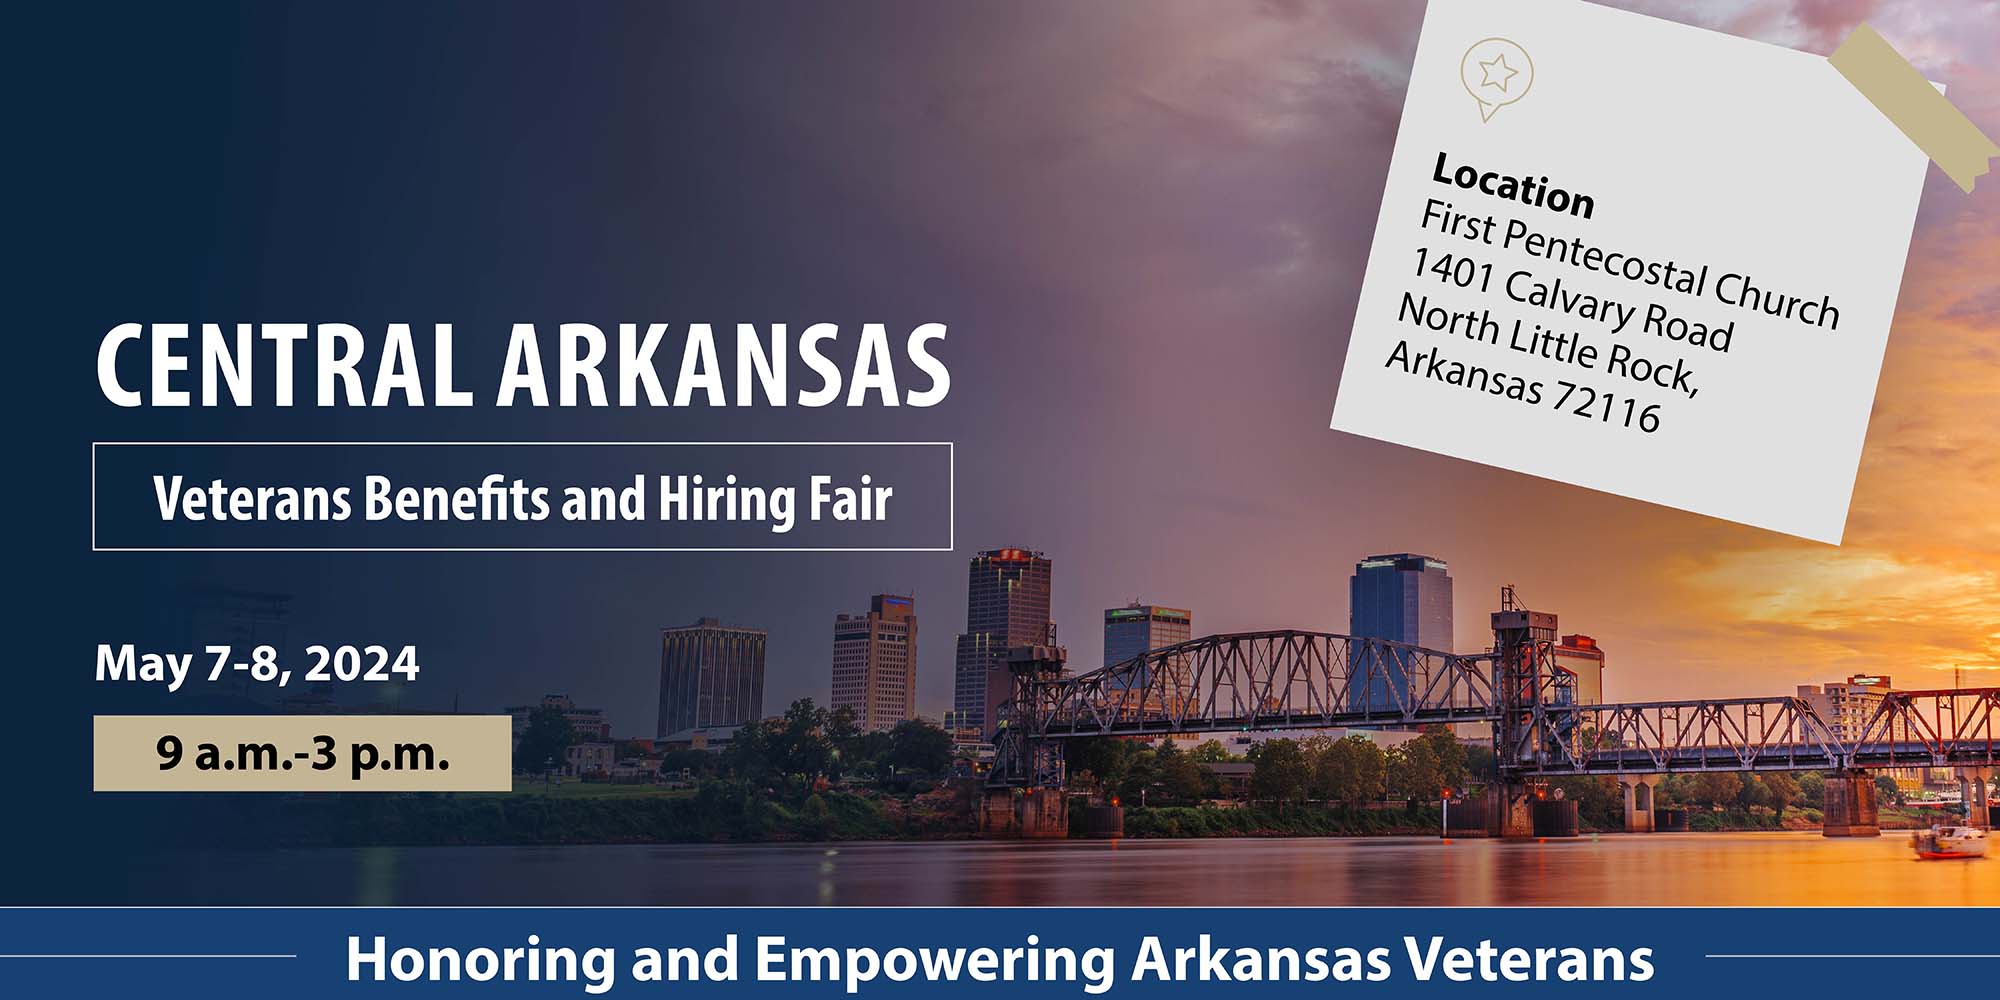 Central Arkansas Veterans Benefits and Hiring Fair